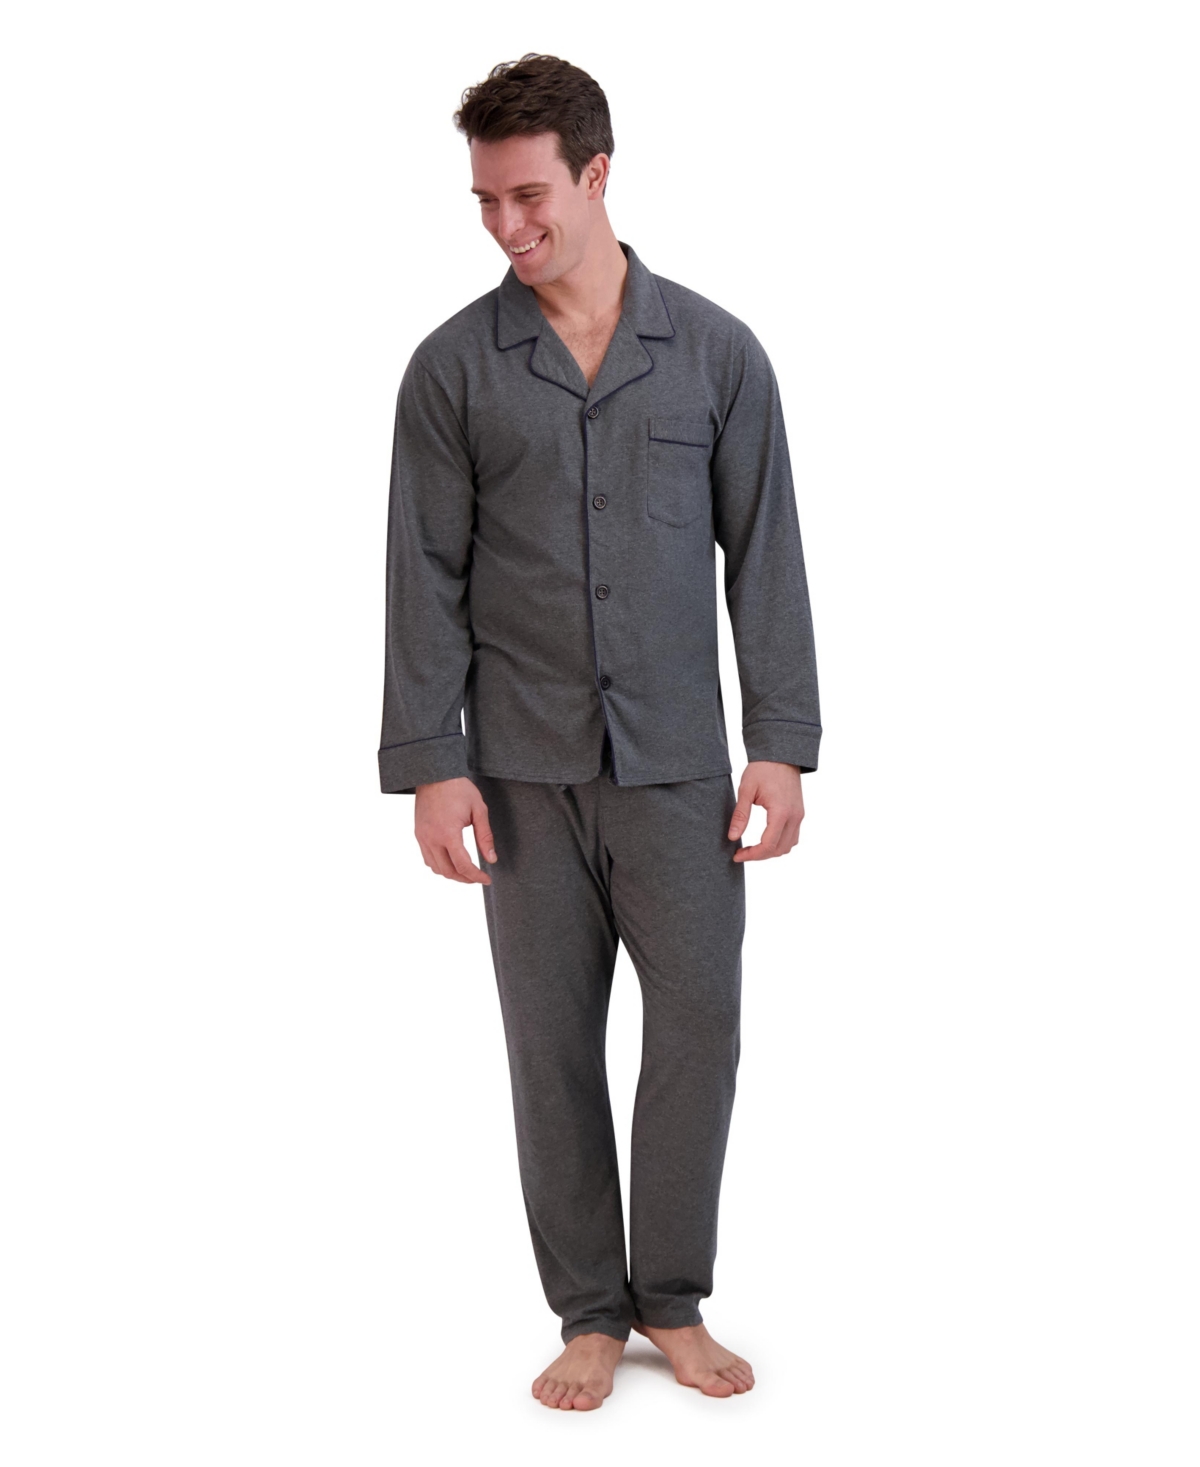 Men's Cotton Modal Knit Pajama, 2 Piece Set - Navy